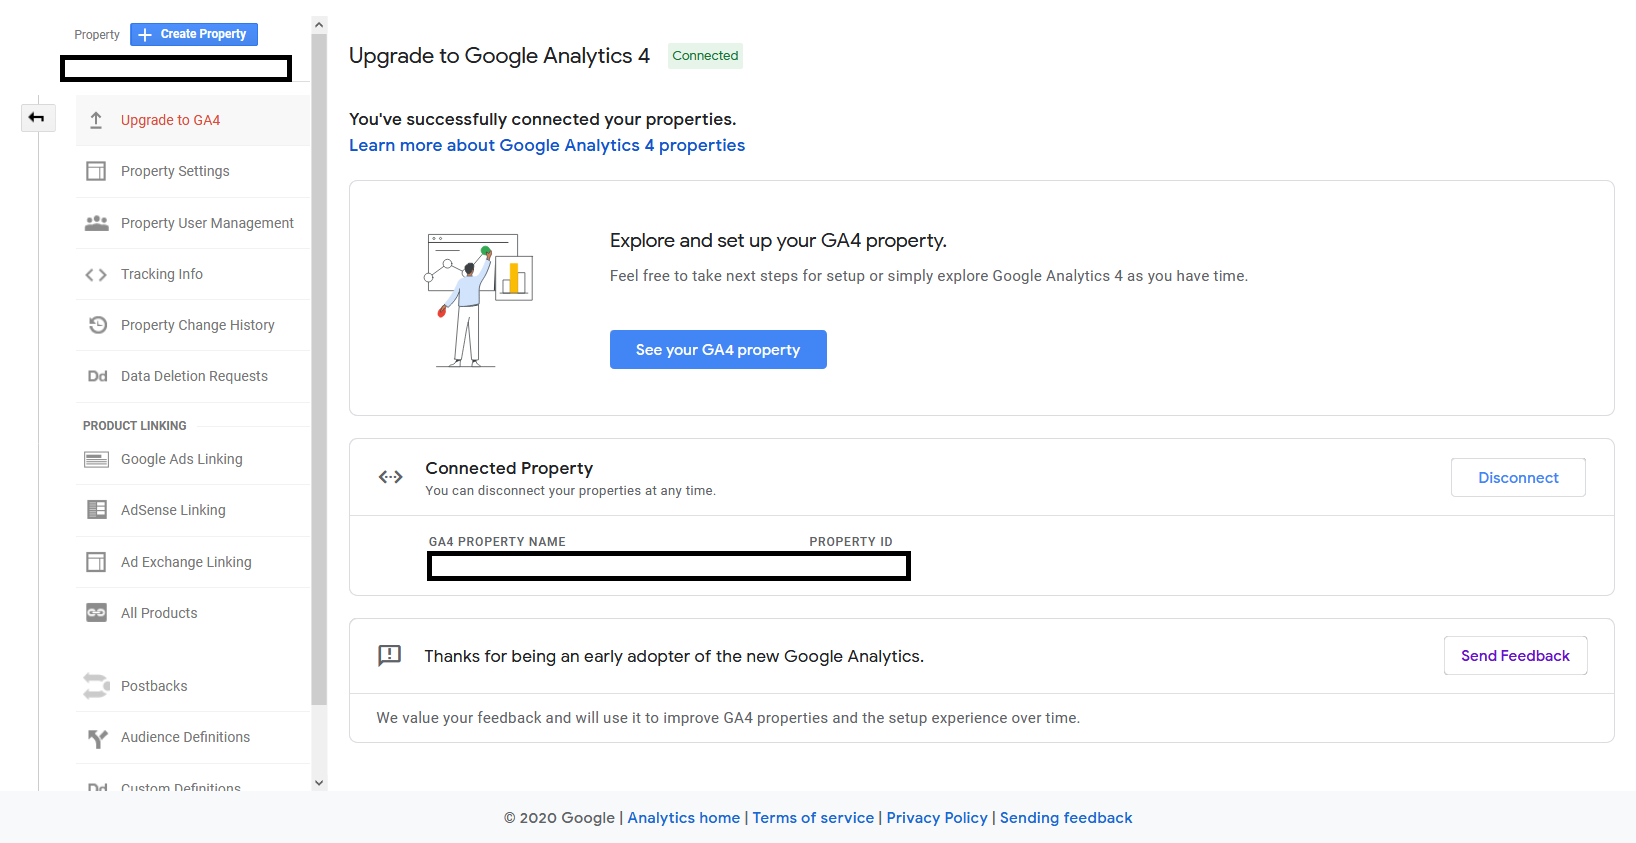 Google Analytics App+Web - The new Google Analytics